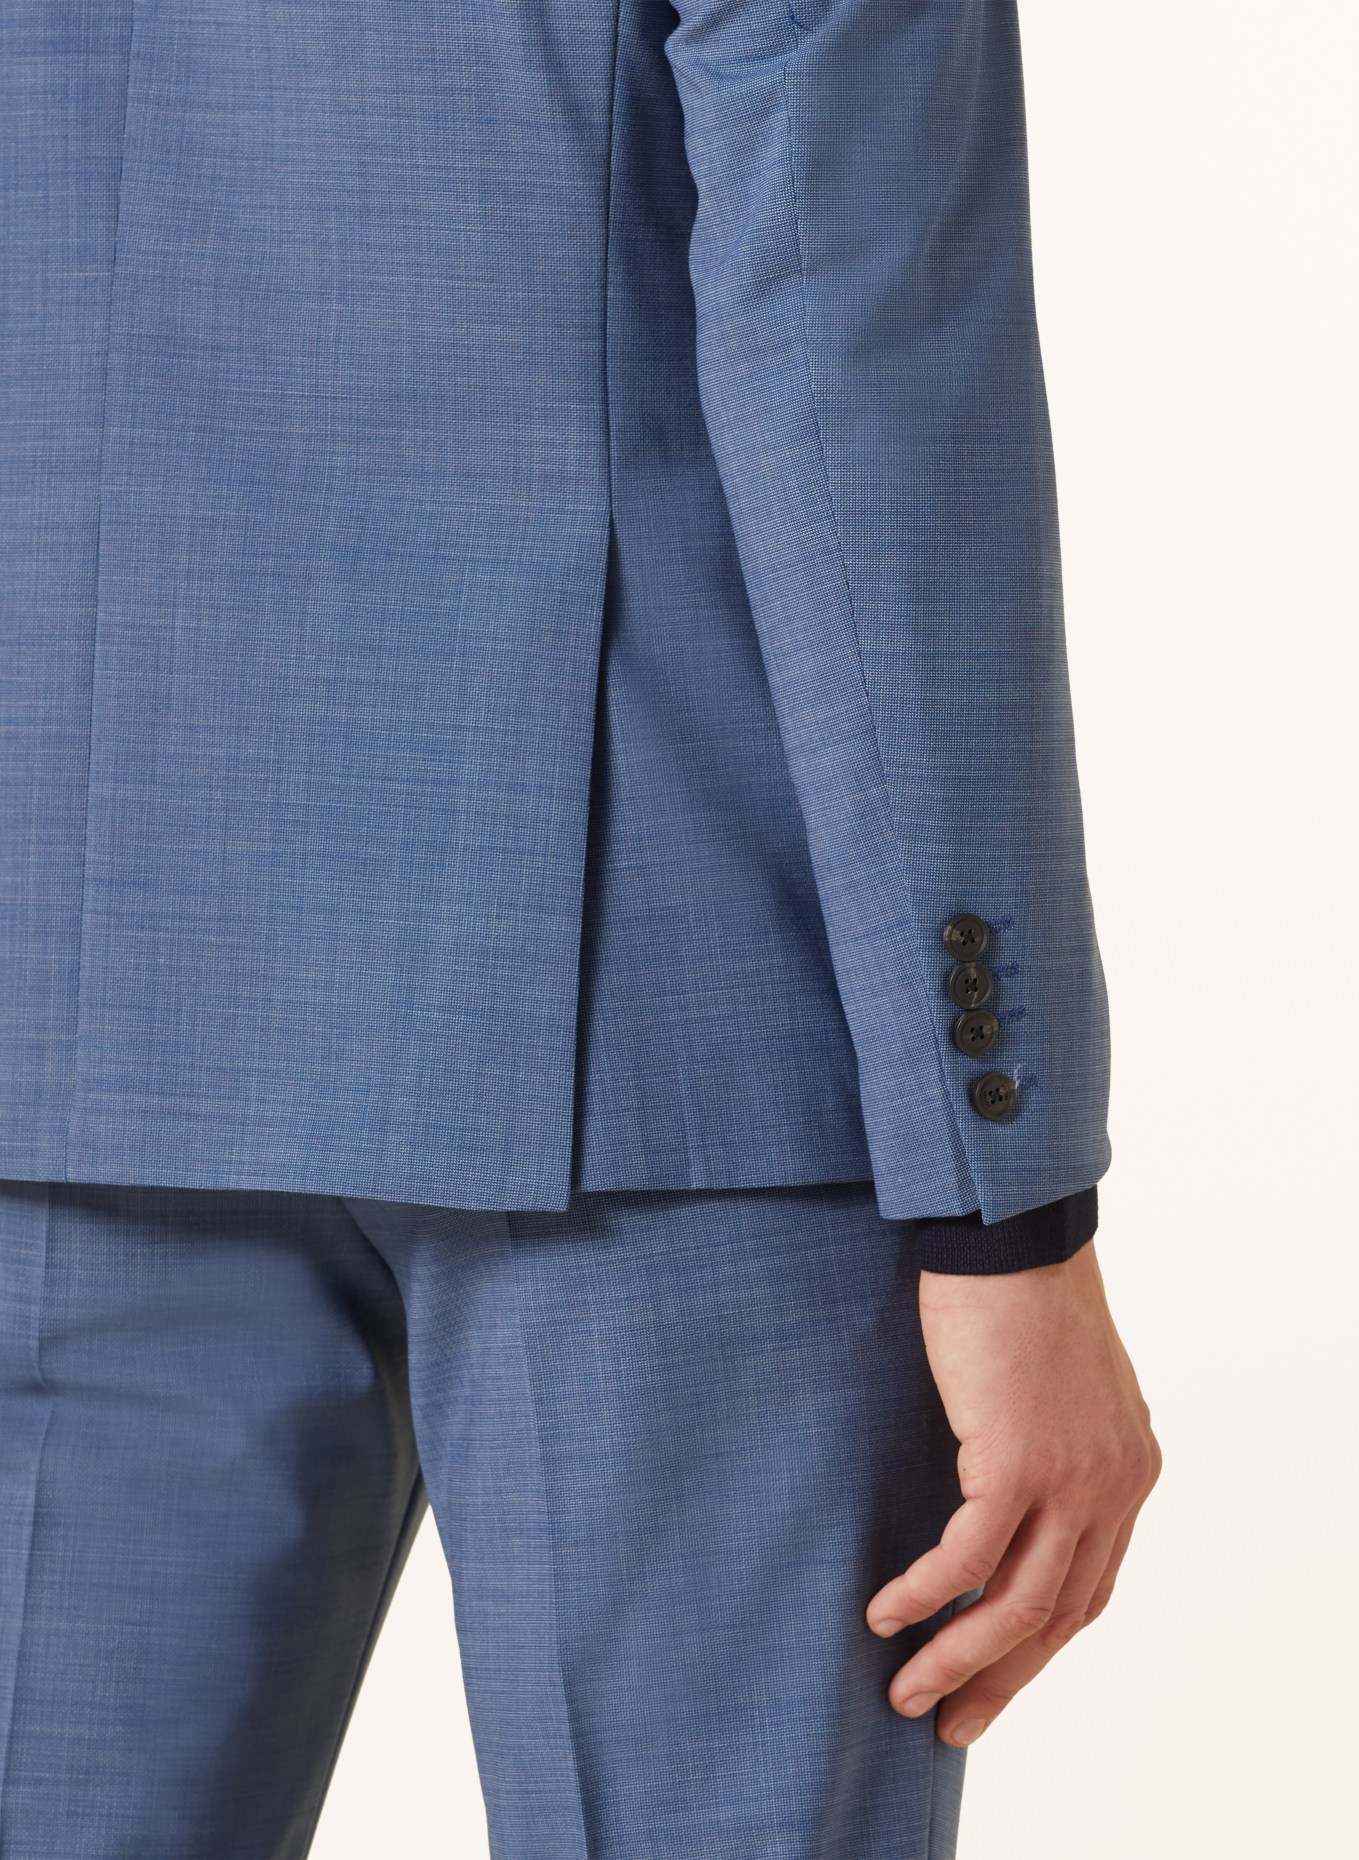 JOOP! Anzug HERBY BLAYR Slim Fit, Farbe: 440 TurquoiseAqua              440 (Bild 6)